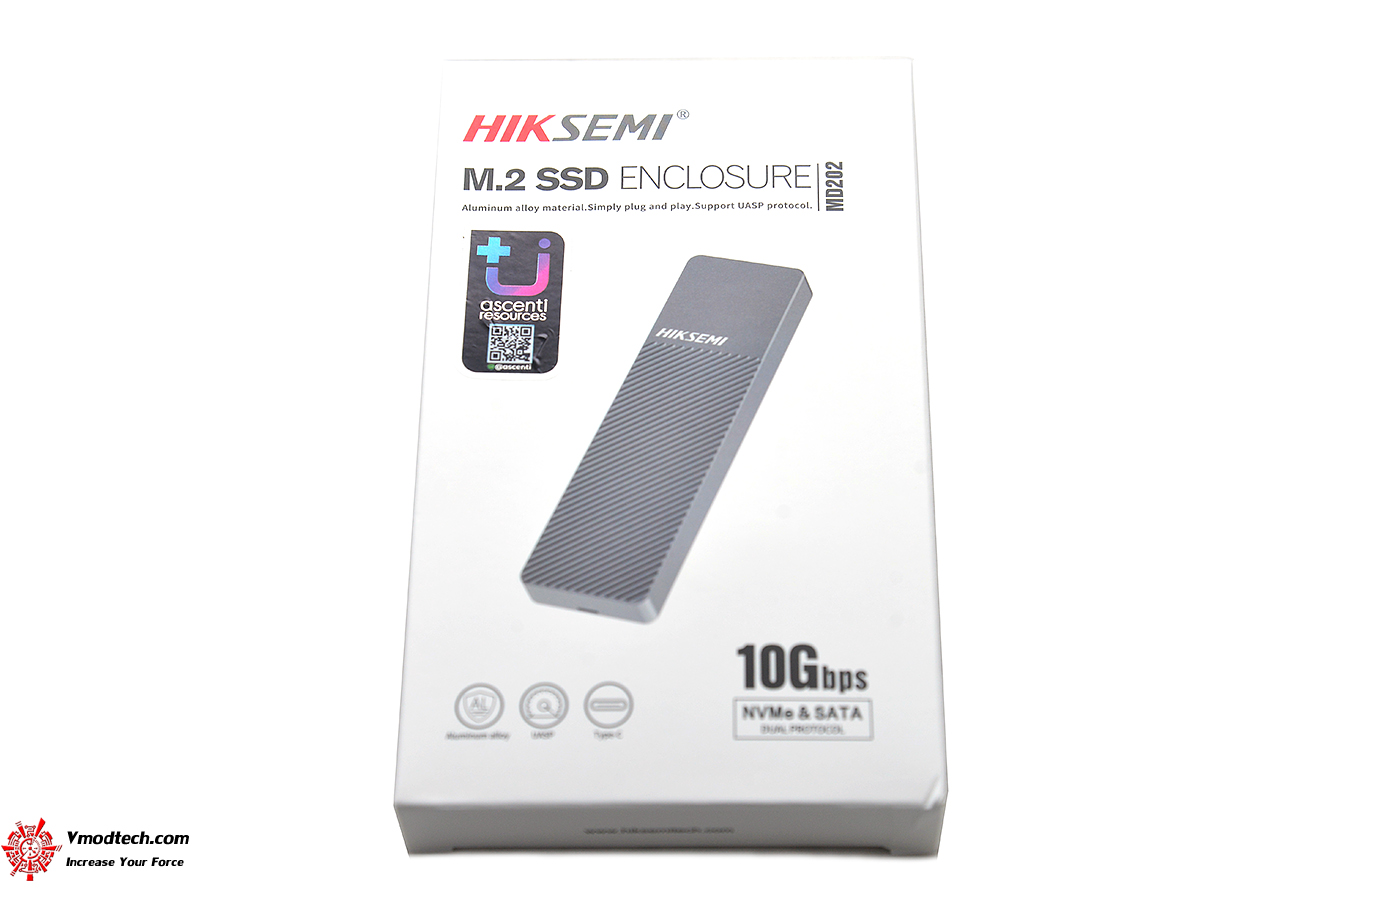 dsc 4040 HIKSEMI M.2 SSD ENCLOSURE MD202 REVIEW